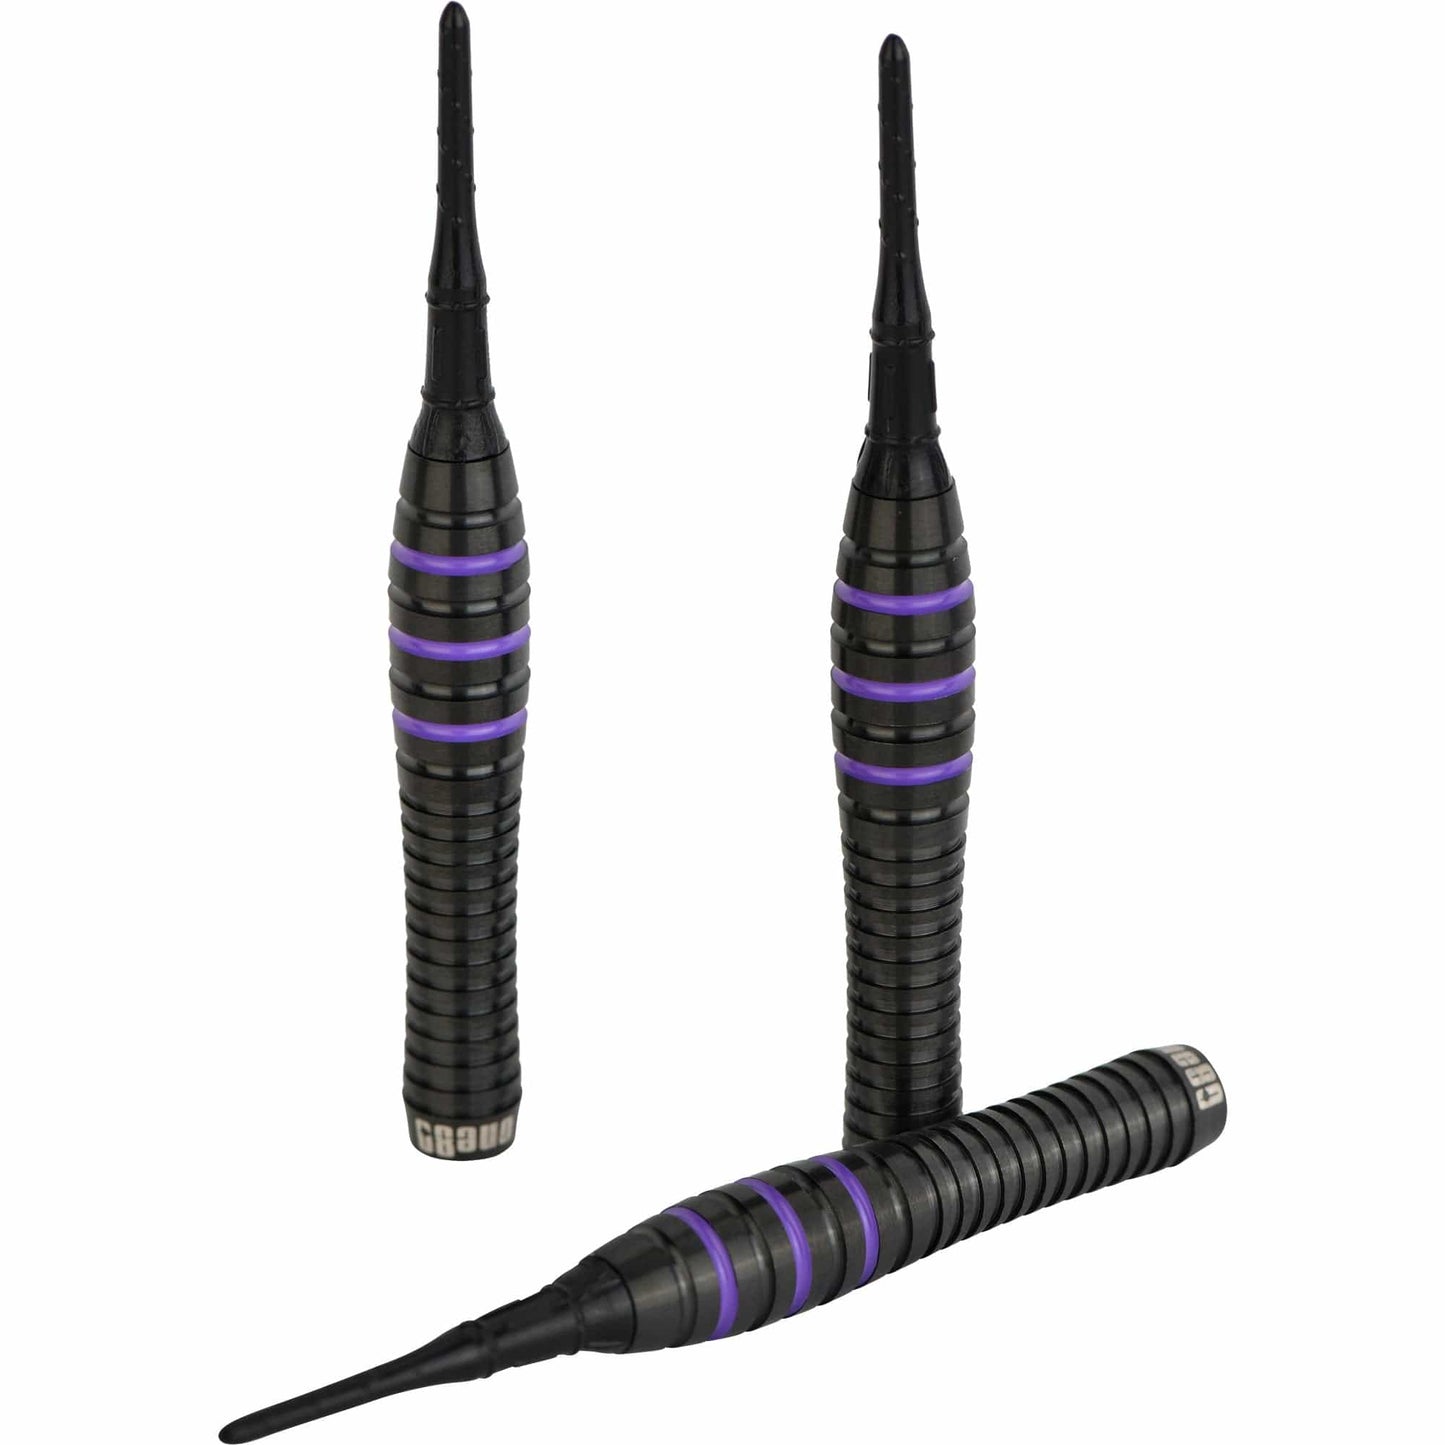 One80 Raise B Darts - Soft Tip - Black - Purple Rings 17g